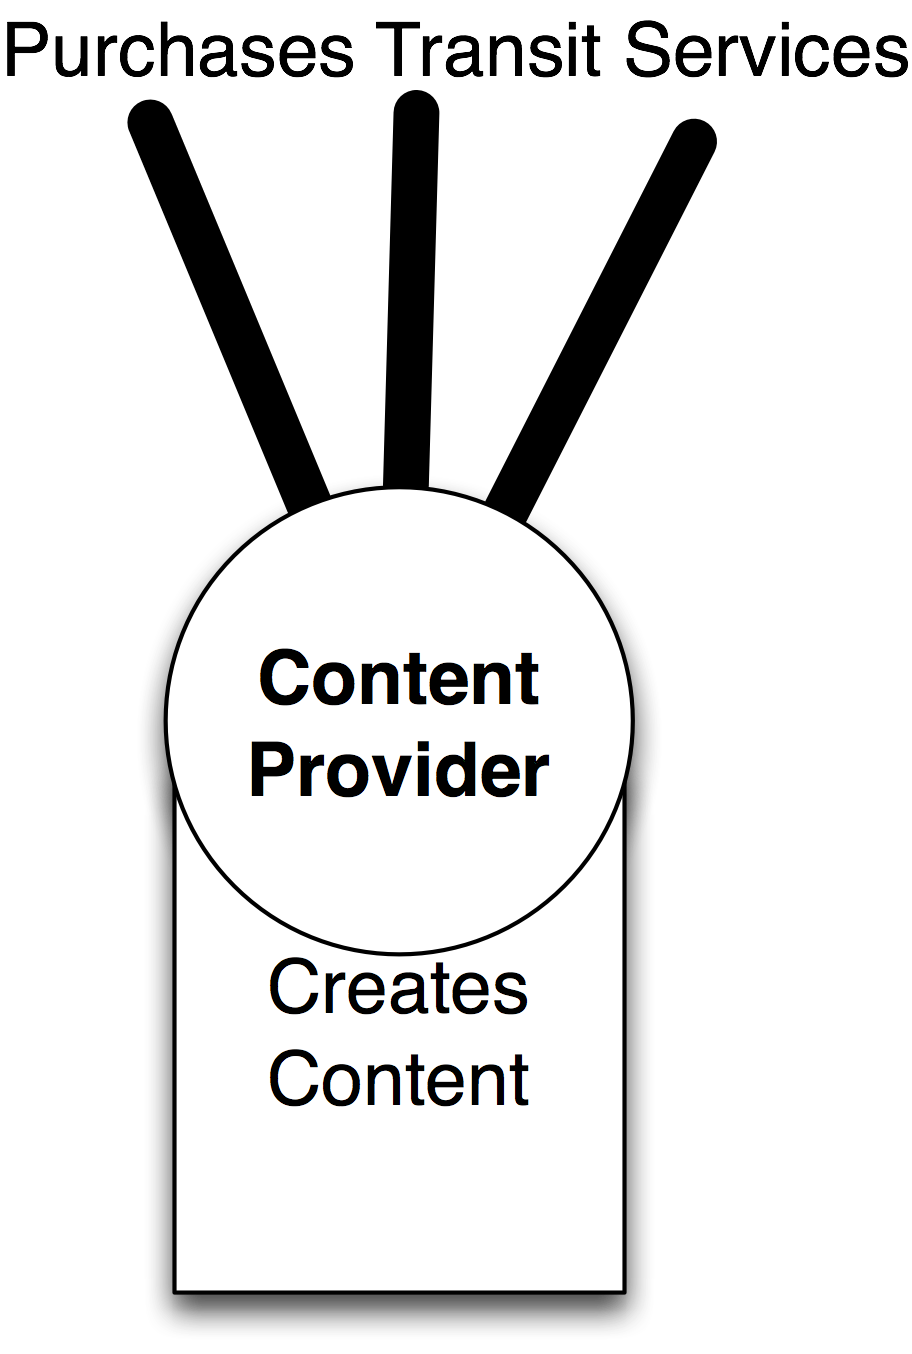 content provider image